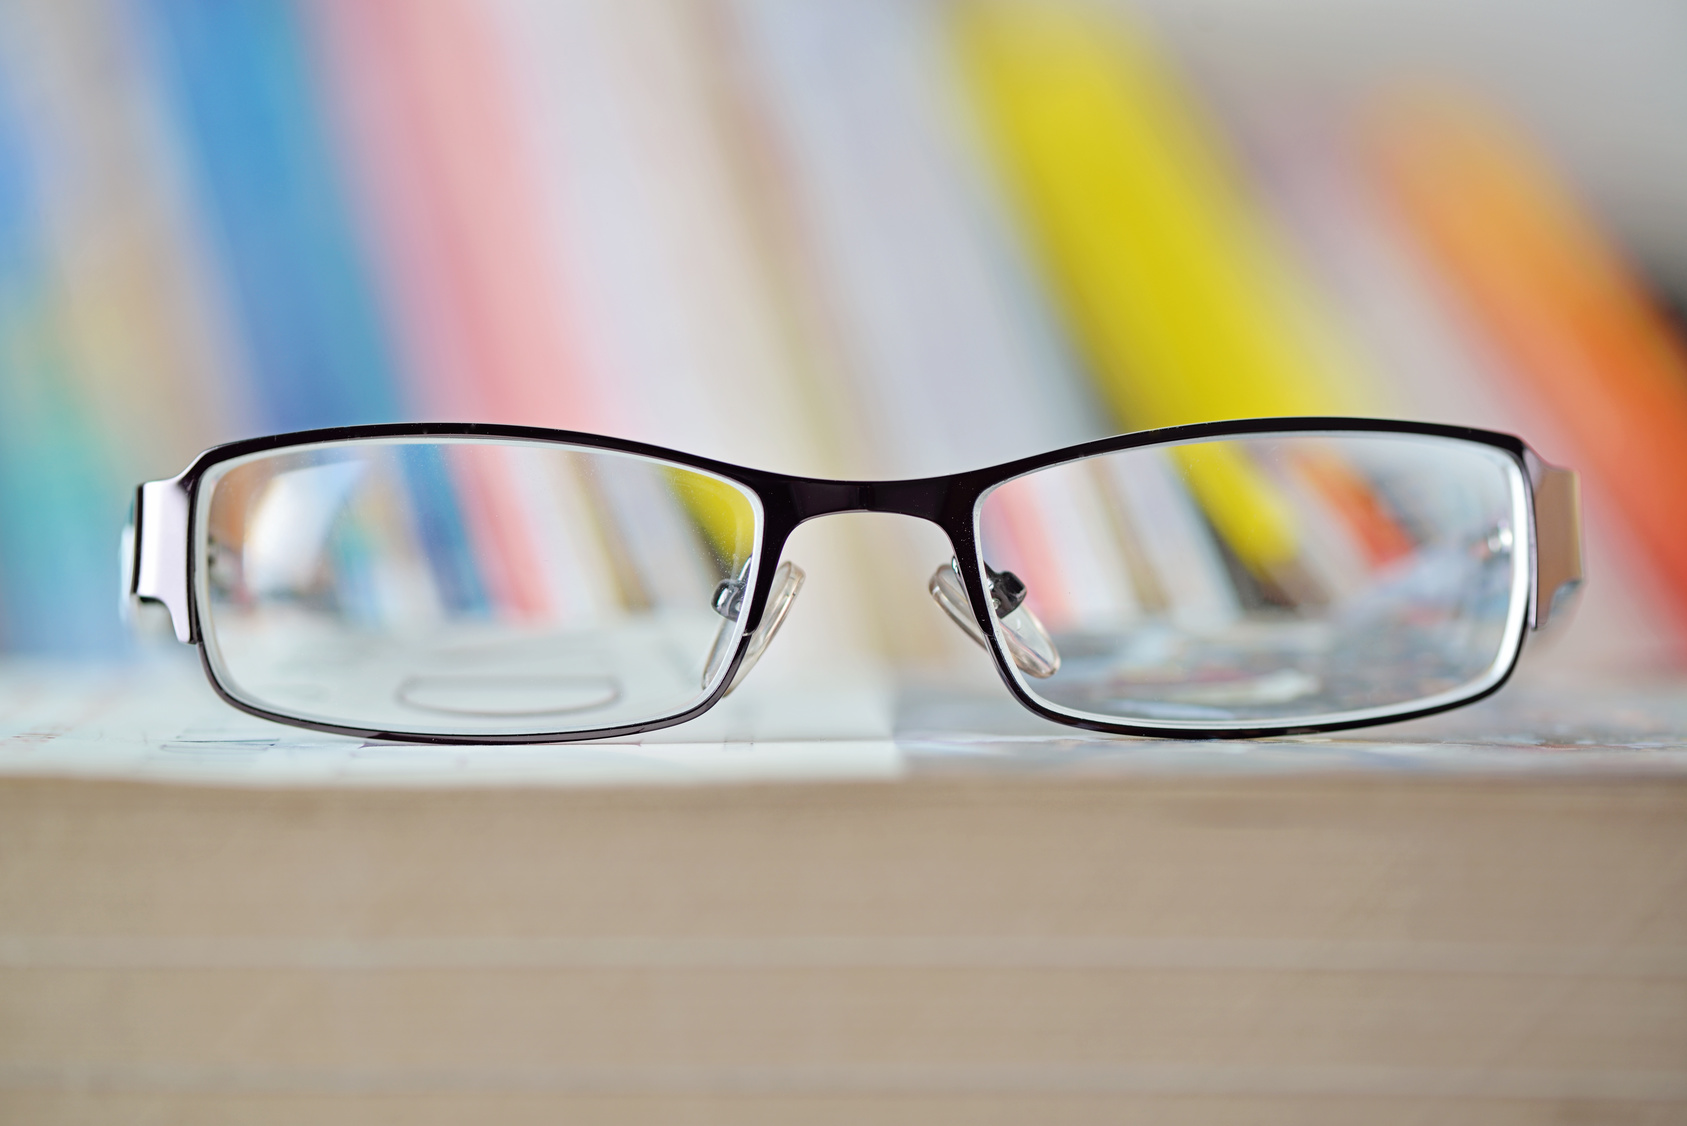 Eyeglass on book